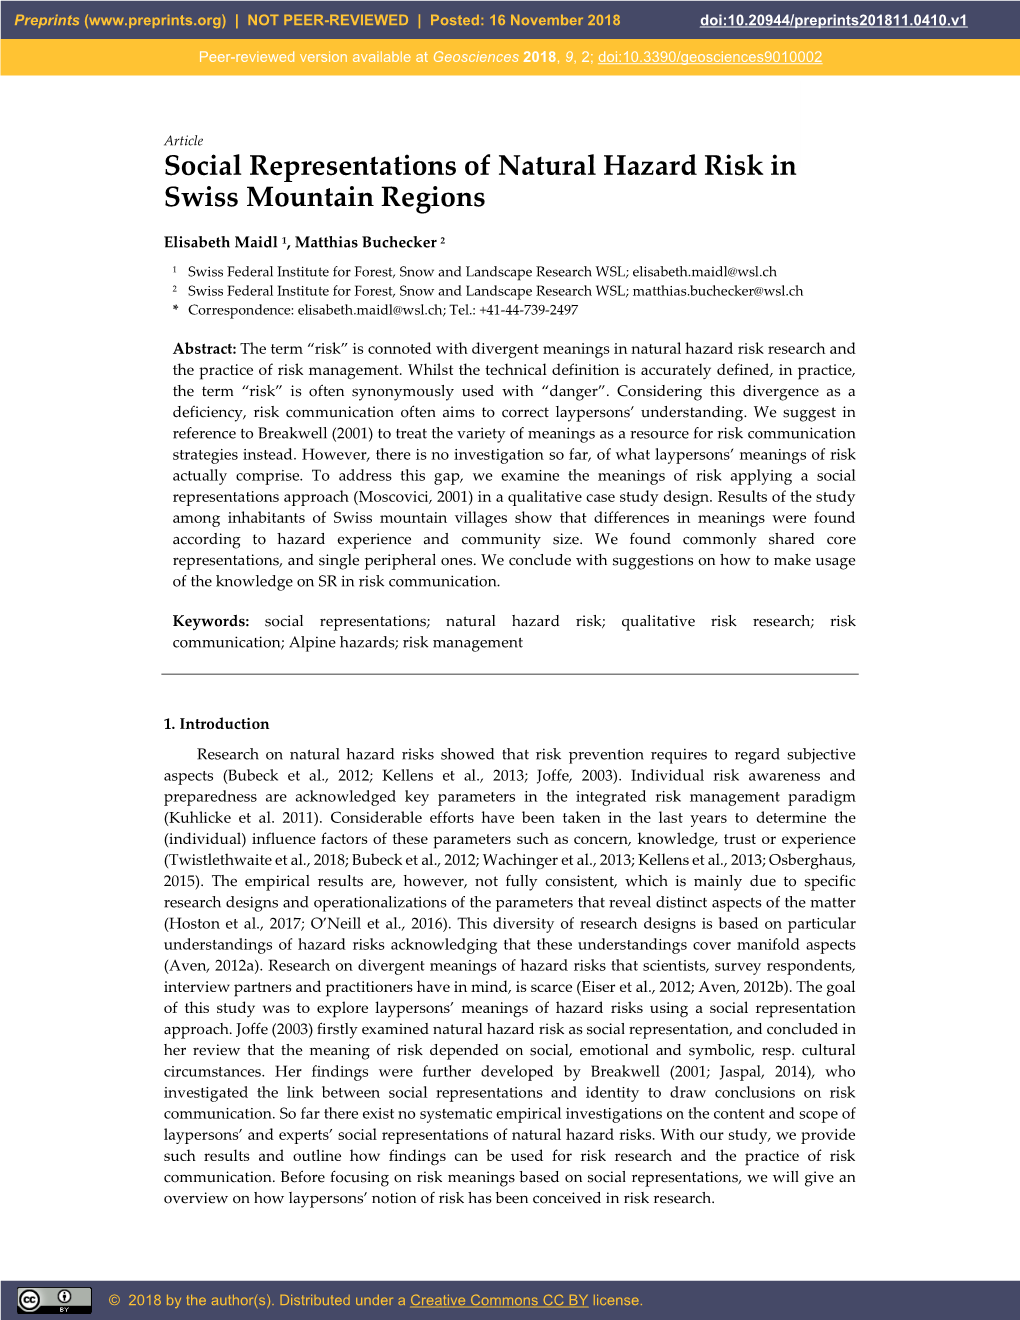 Social Representations of Natural Hazard Risk in Swiss Mountain Regions